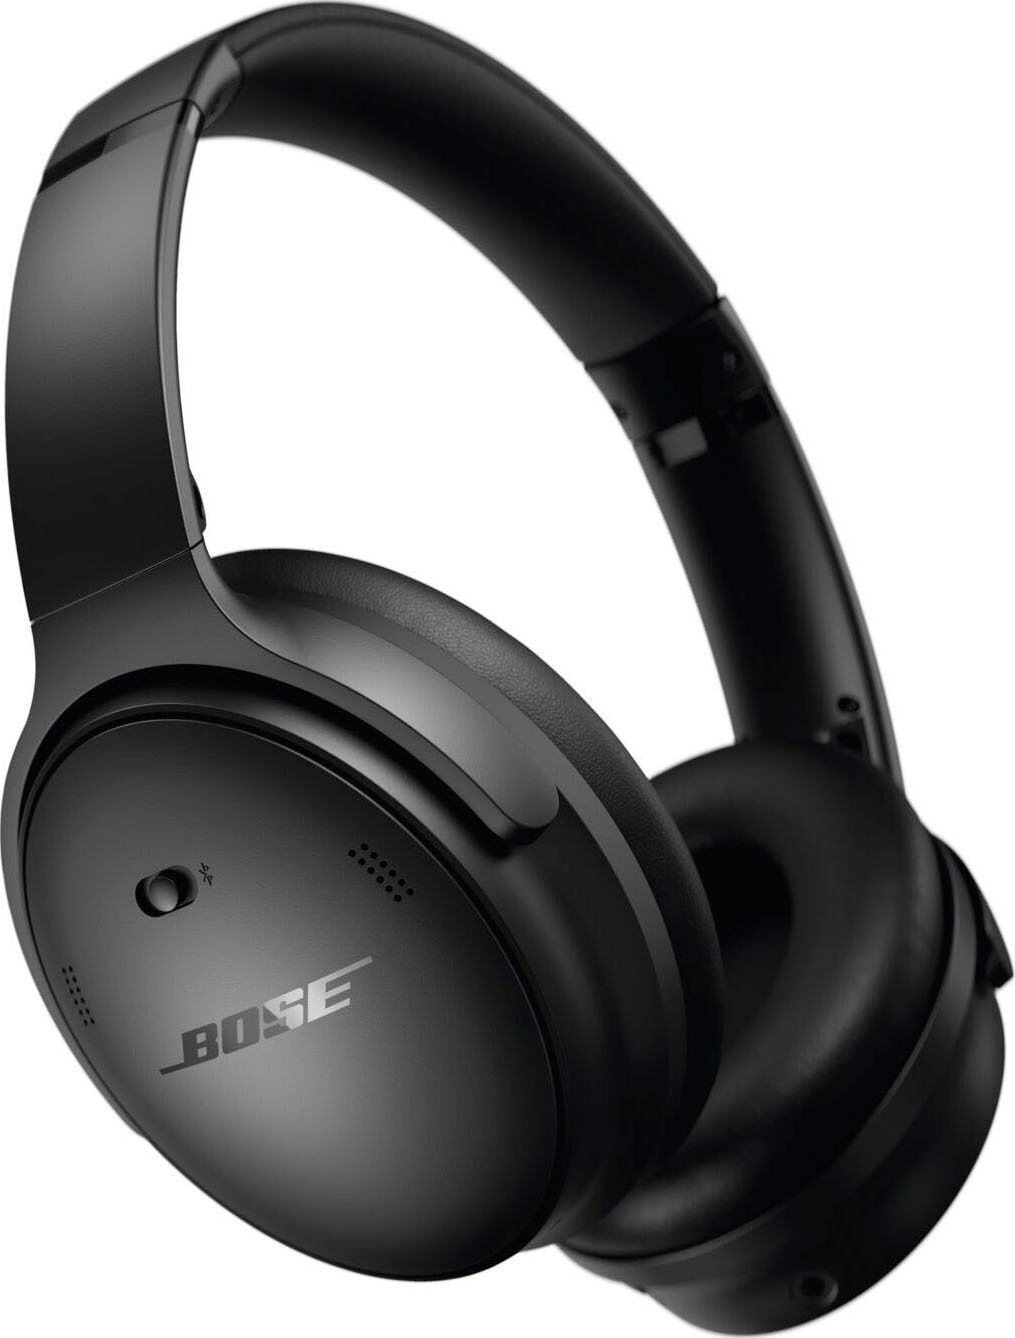 BOSE Over-Ear-Kopfhörer "QuietComfort Headphones" Kopfhörer schwarz (black) Bluetooth Kopfhörer